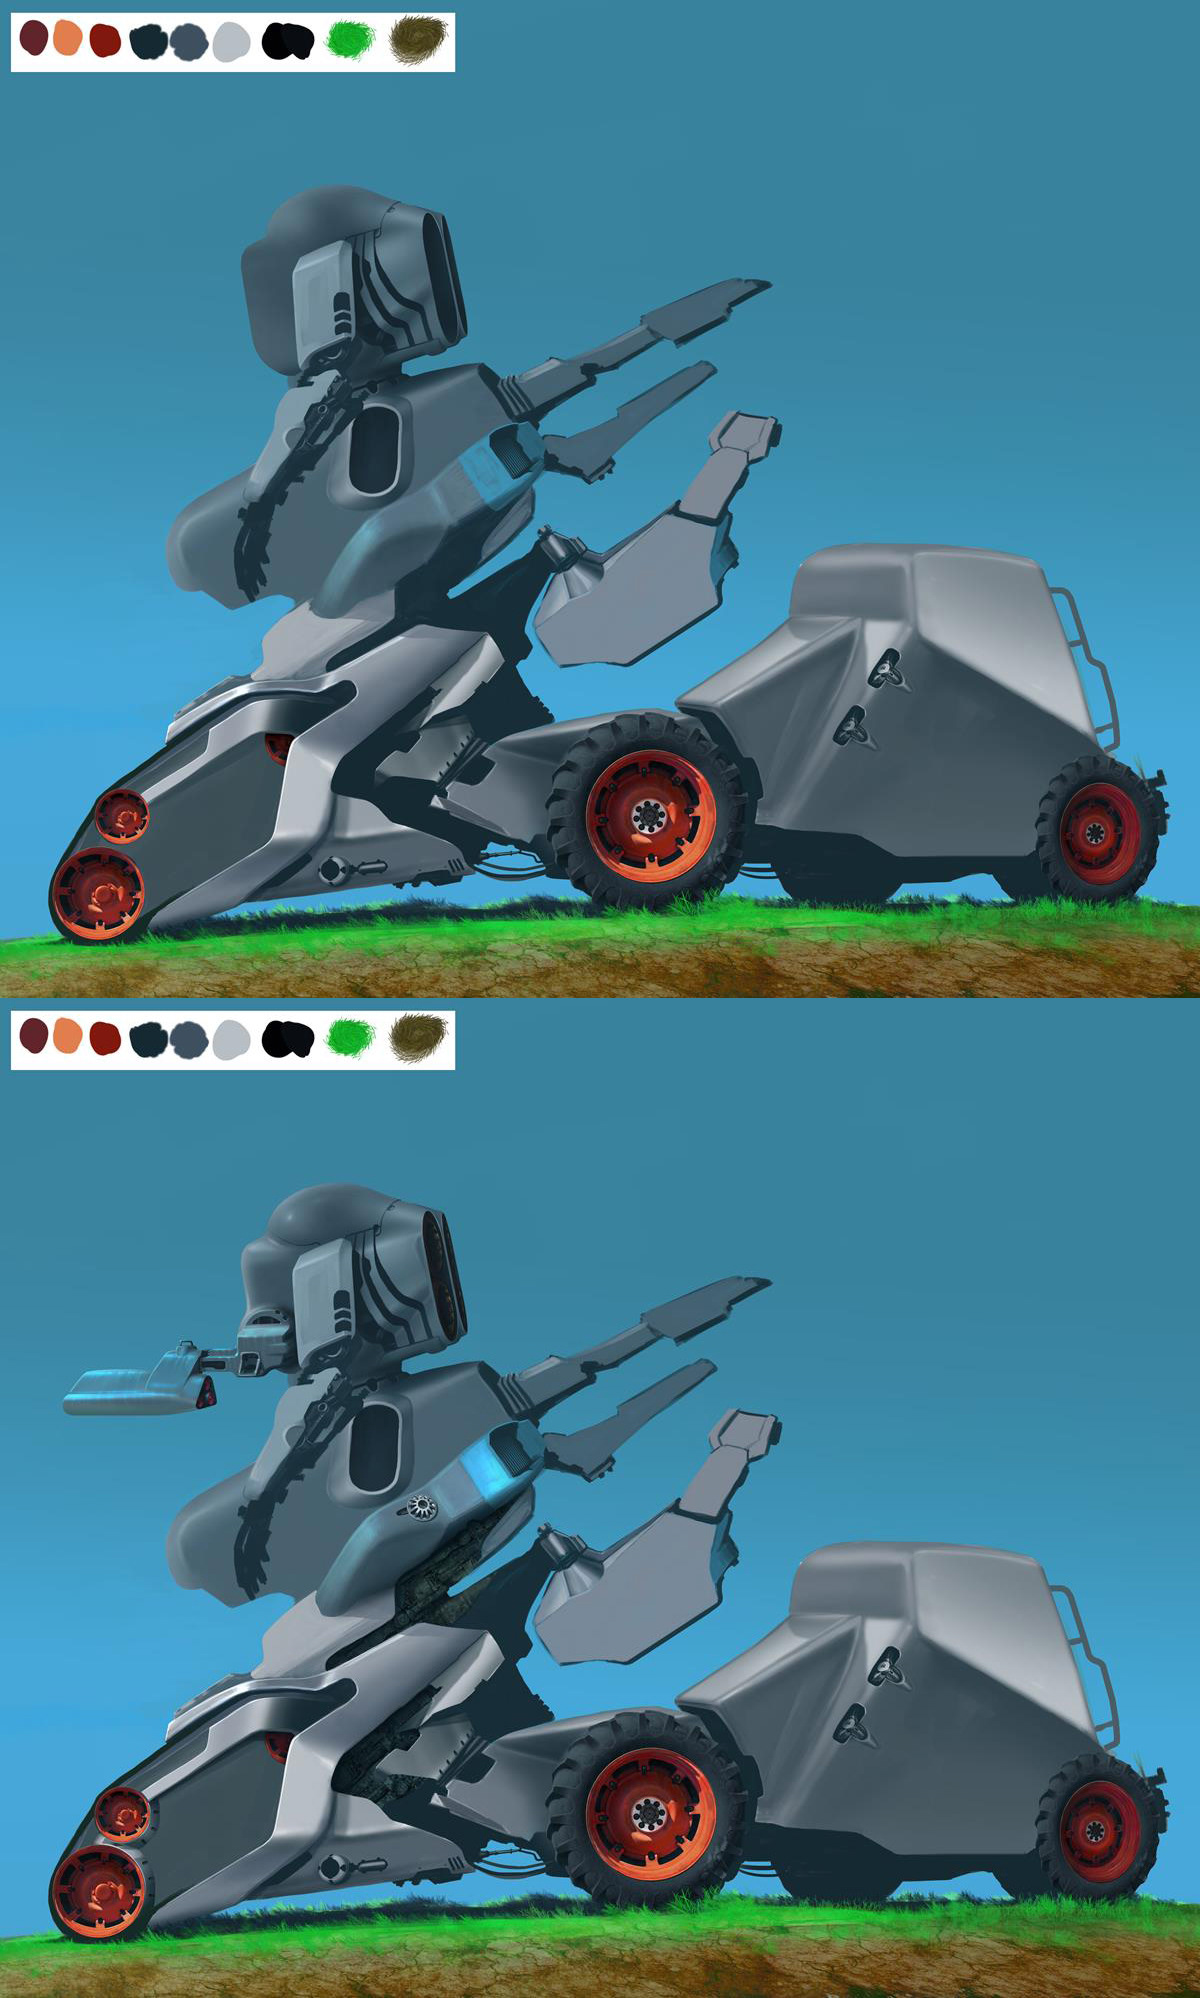 Vehicle droid robot army Military Sci Fi sci-fi science fiction concept concept art design automotive   movie game conceptual